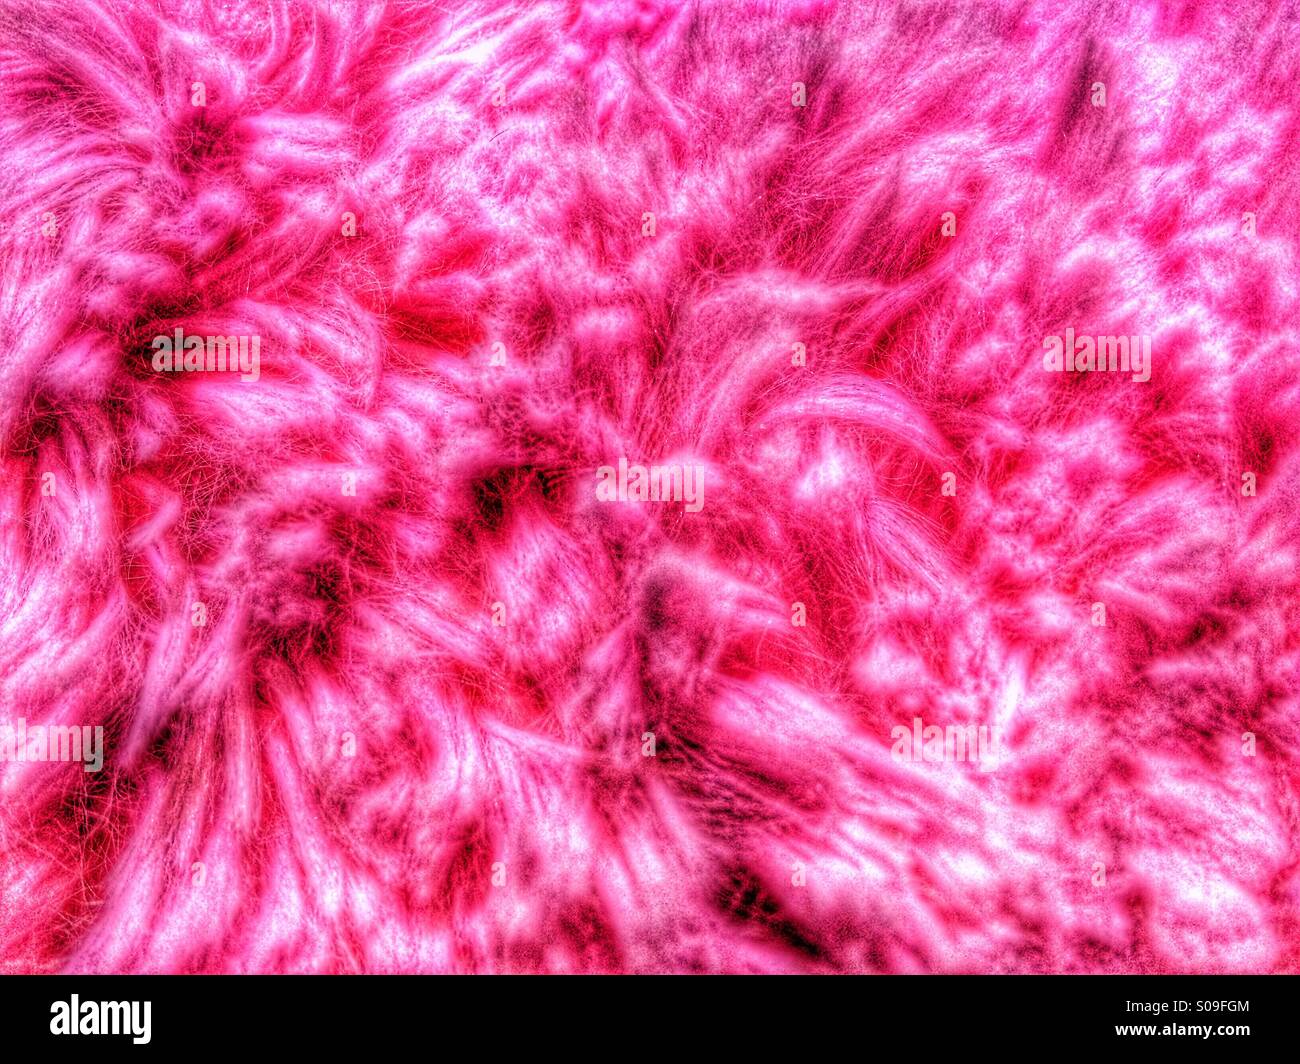 Pink Fluffy Blanket Stock Photo Alamy